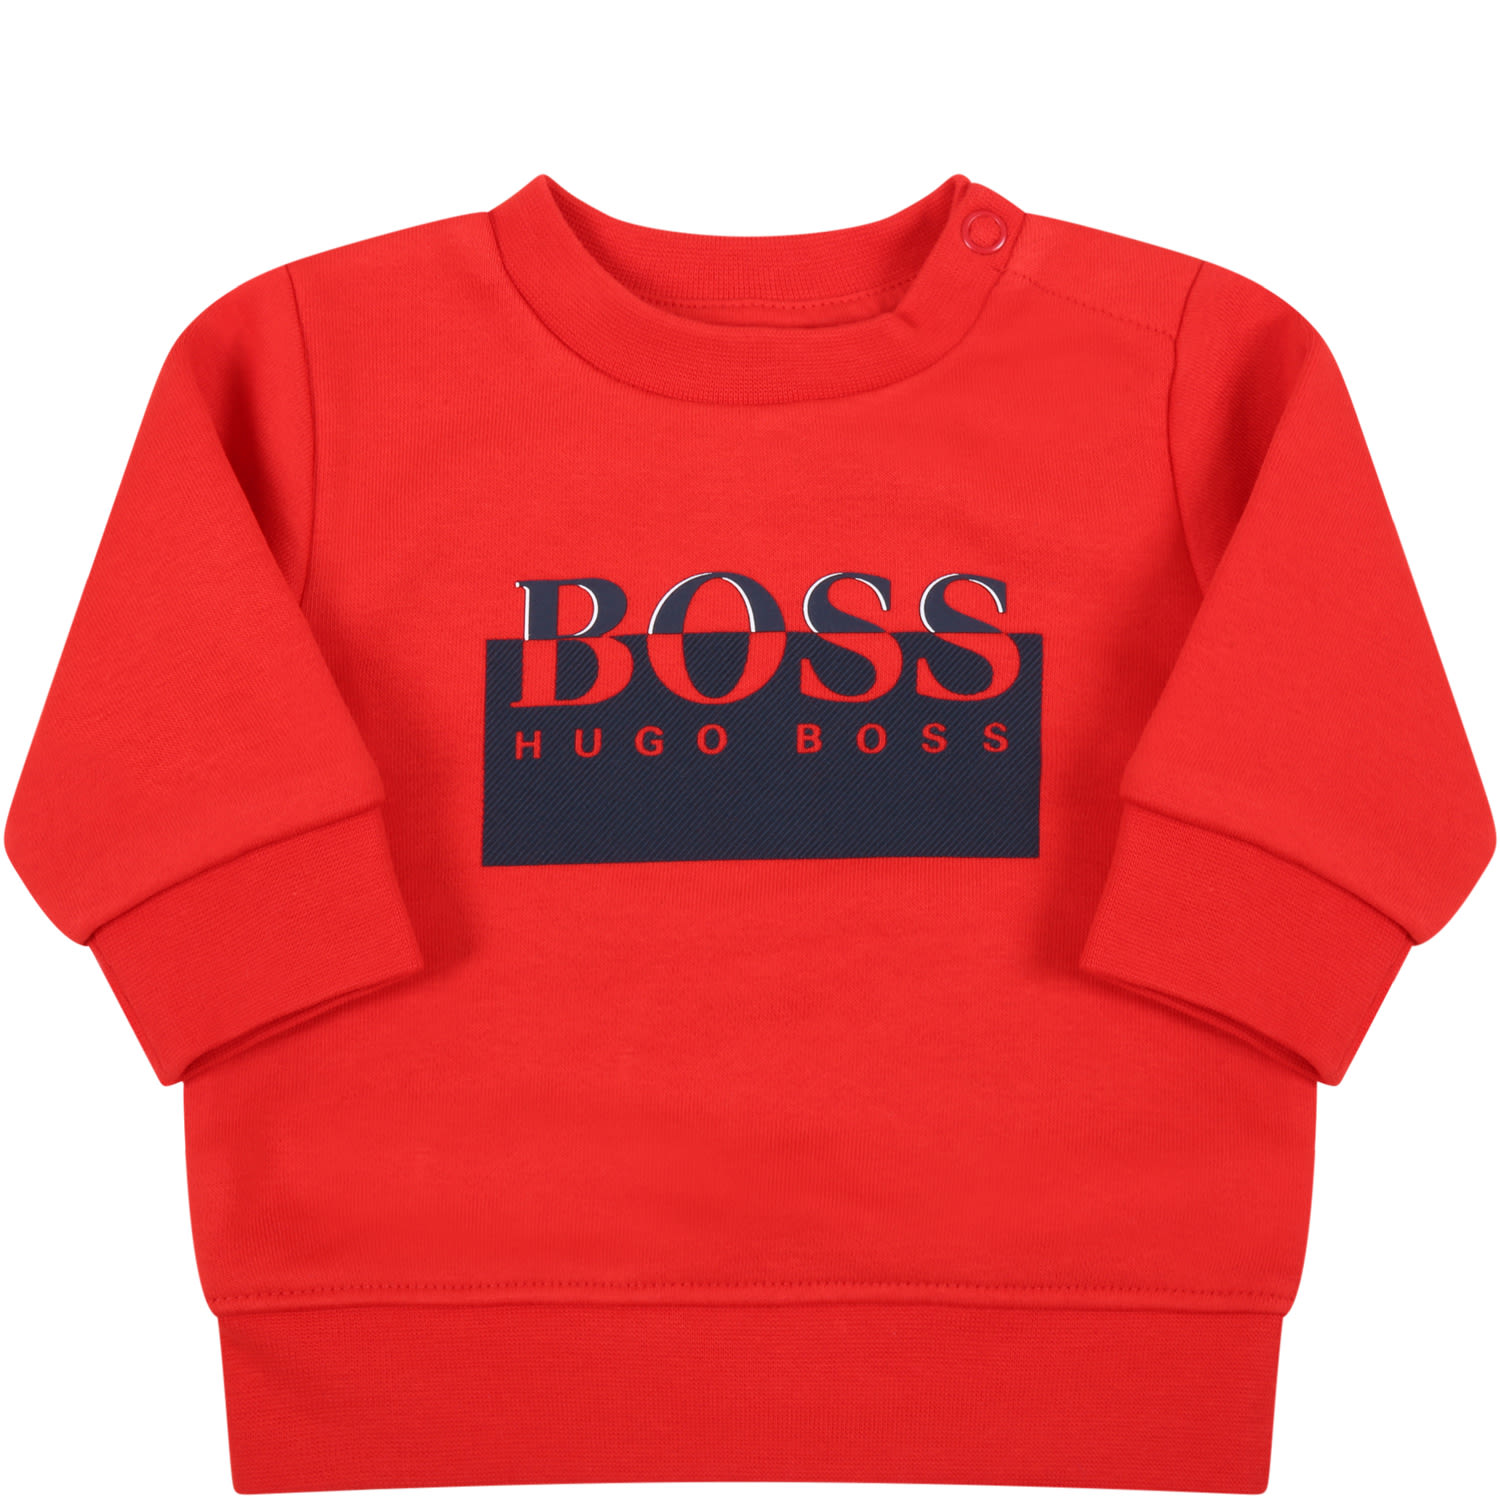 Hugo Boss Red Sweatshirt For Baby Boy With Blue Logo